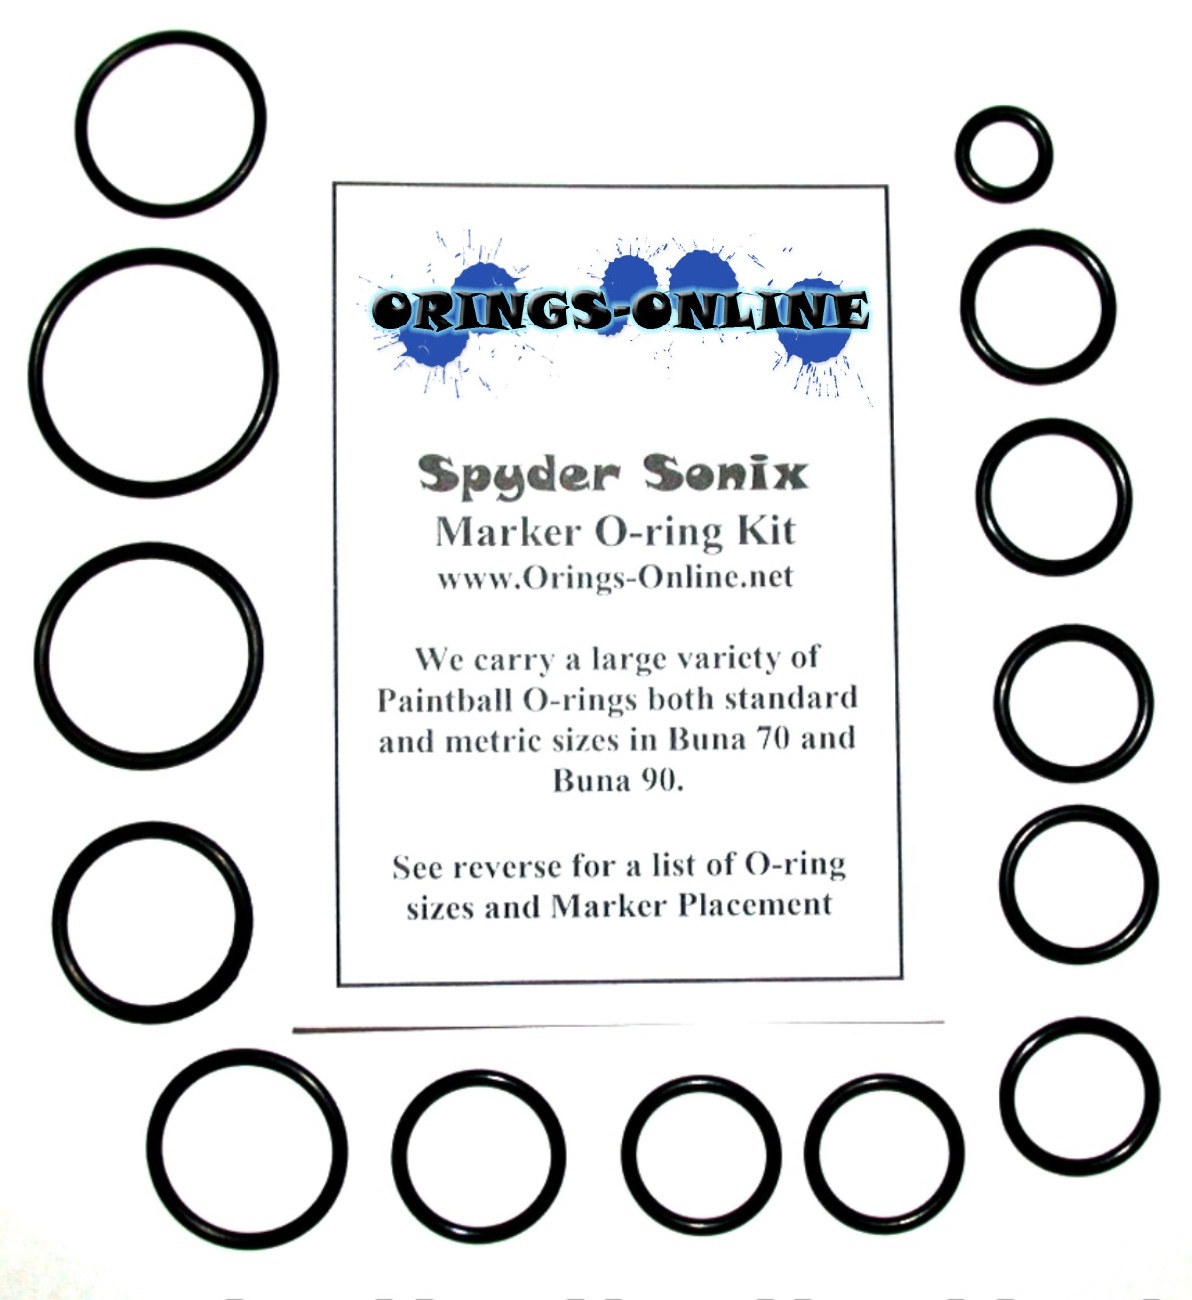 Spyder Sonix Marker O-ring Kit